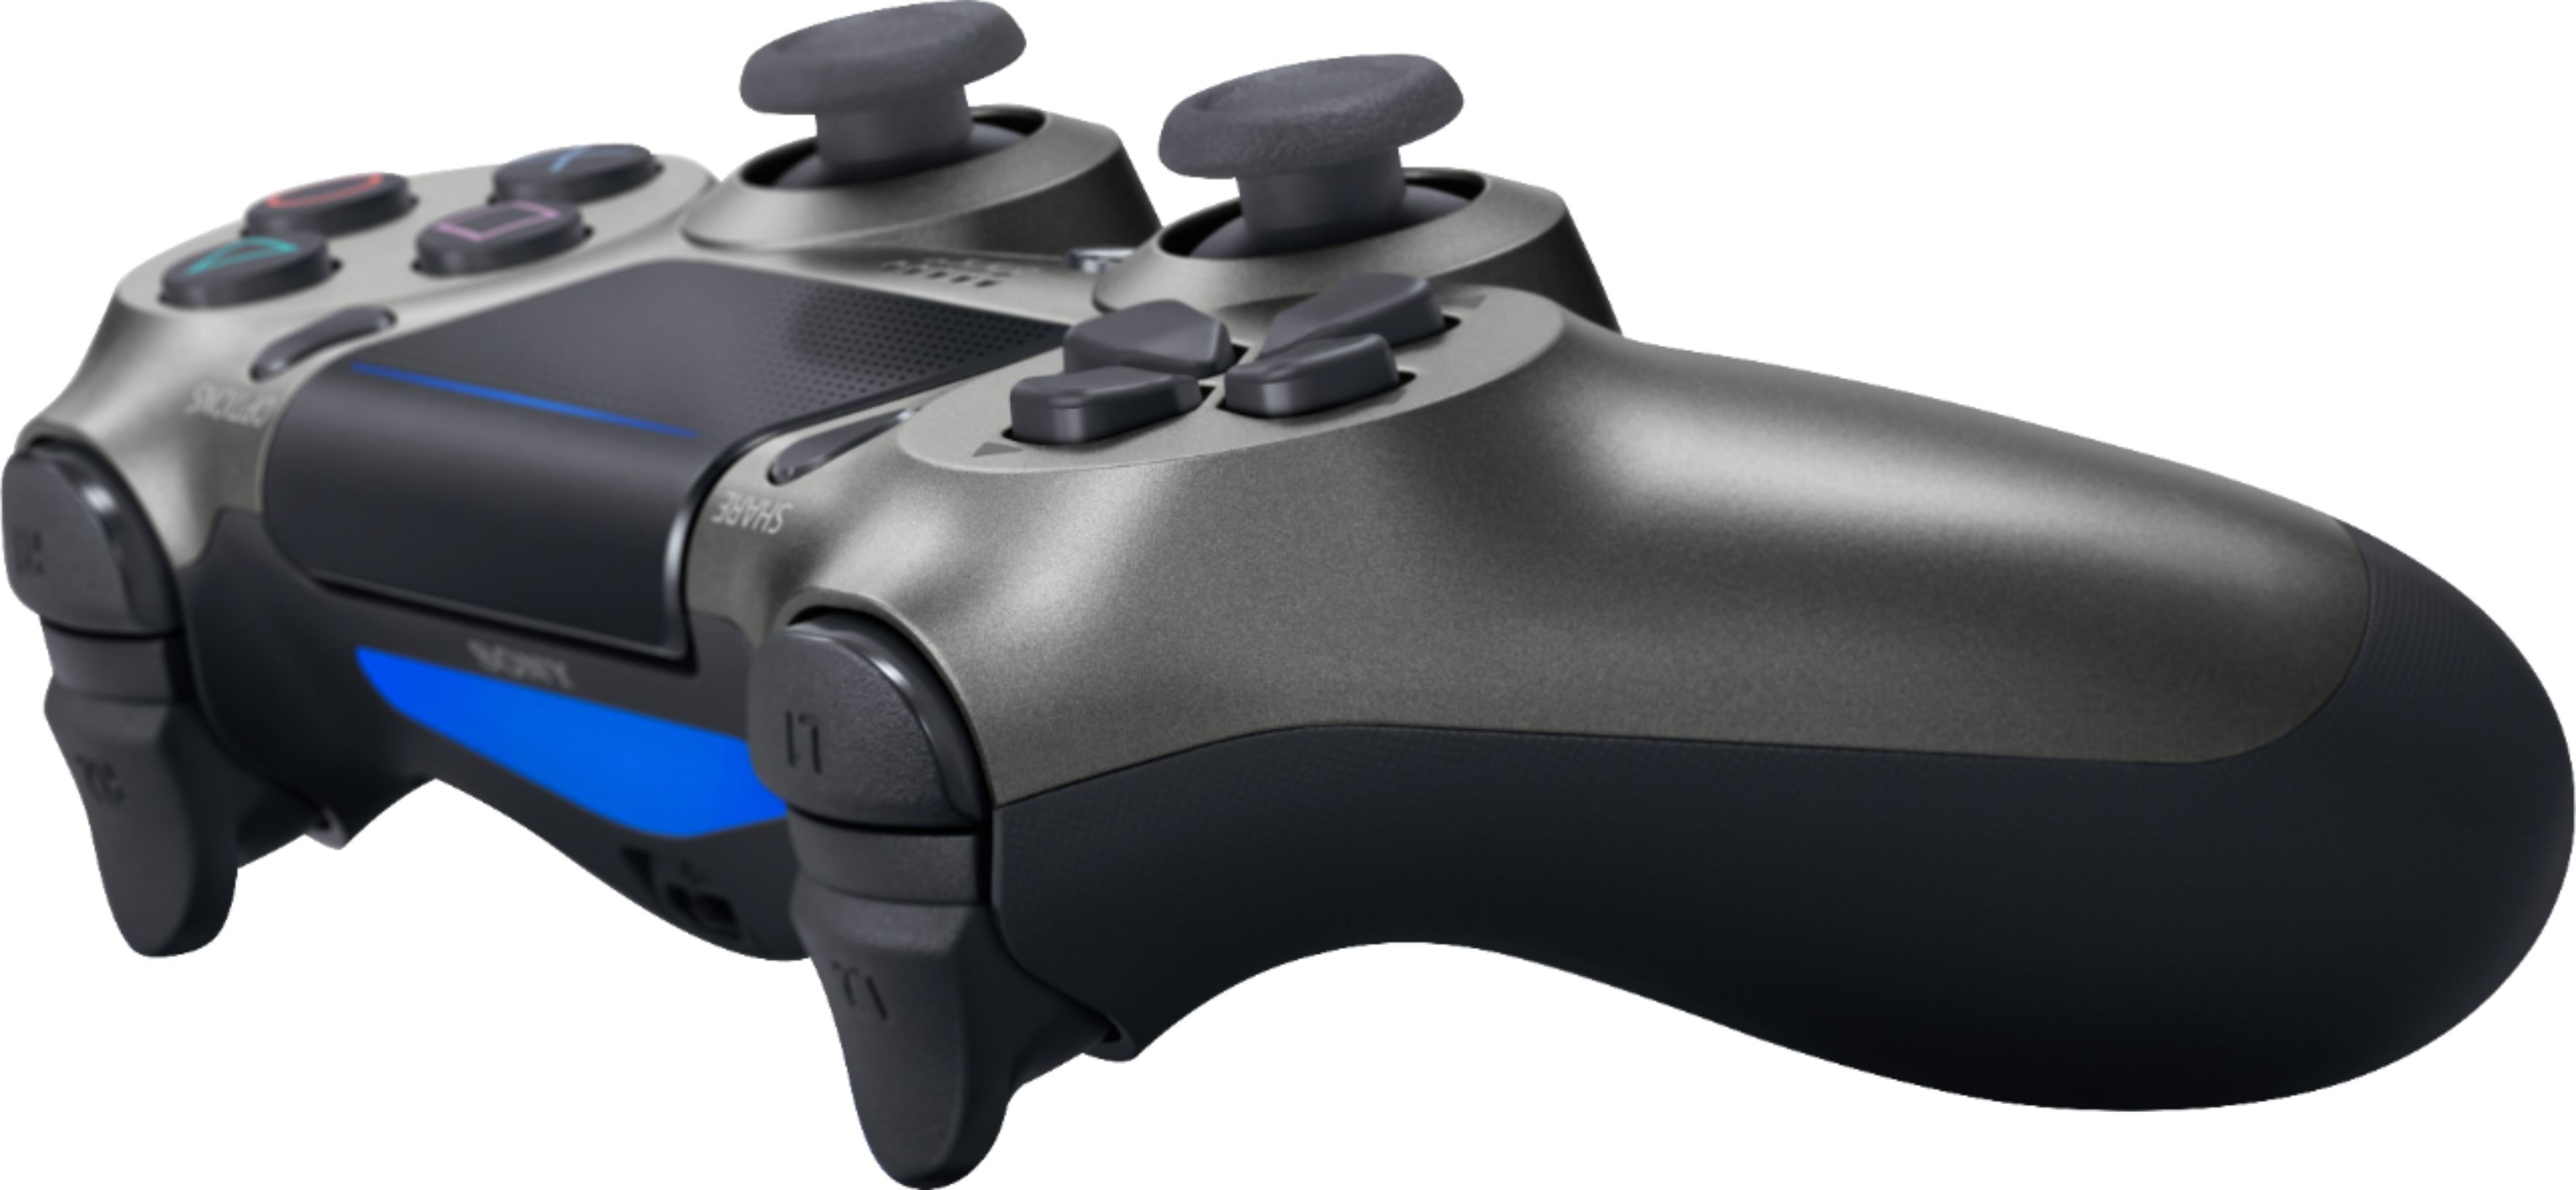 Best Buy: DualShock 4 Wireless Controller for Sony PlayStation 4